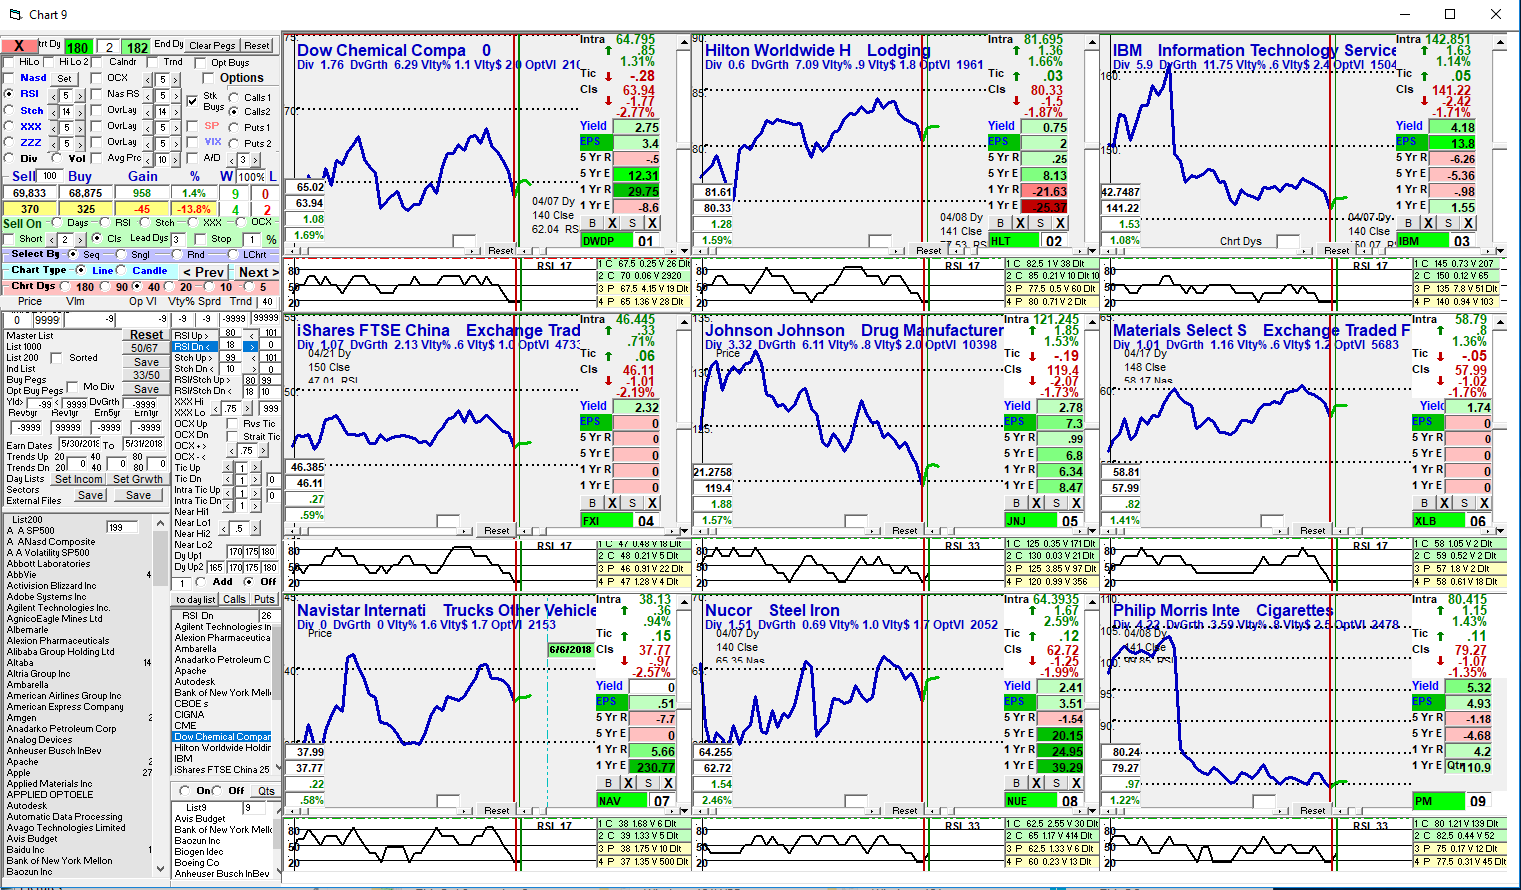 Stock Option Charts